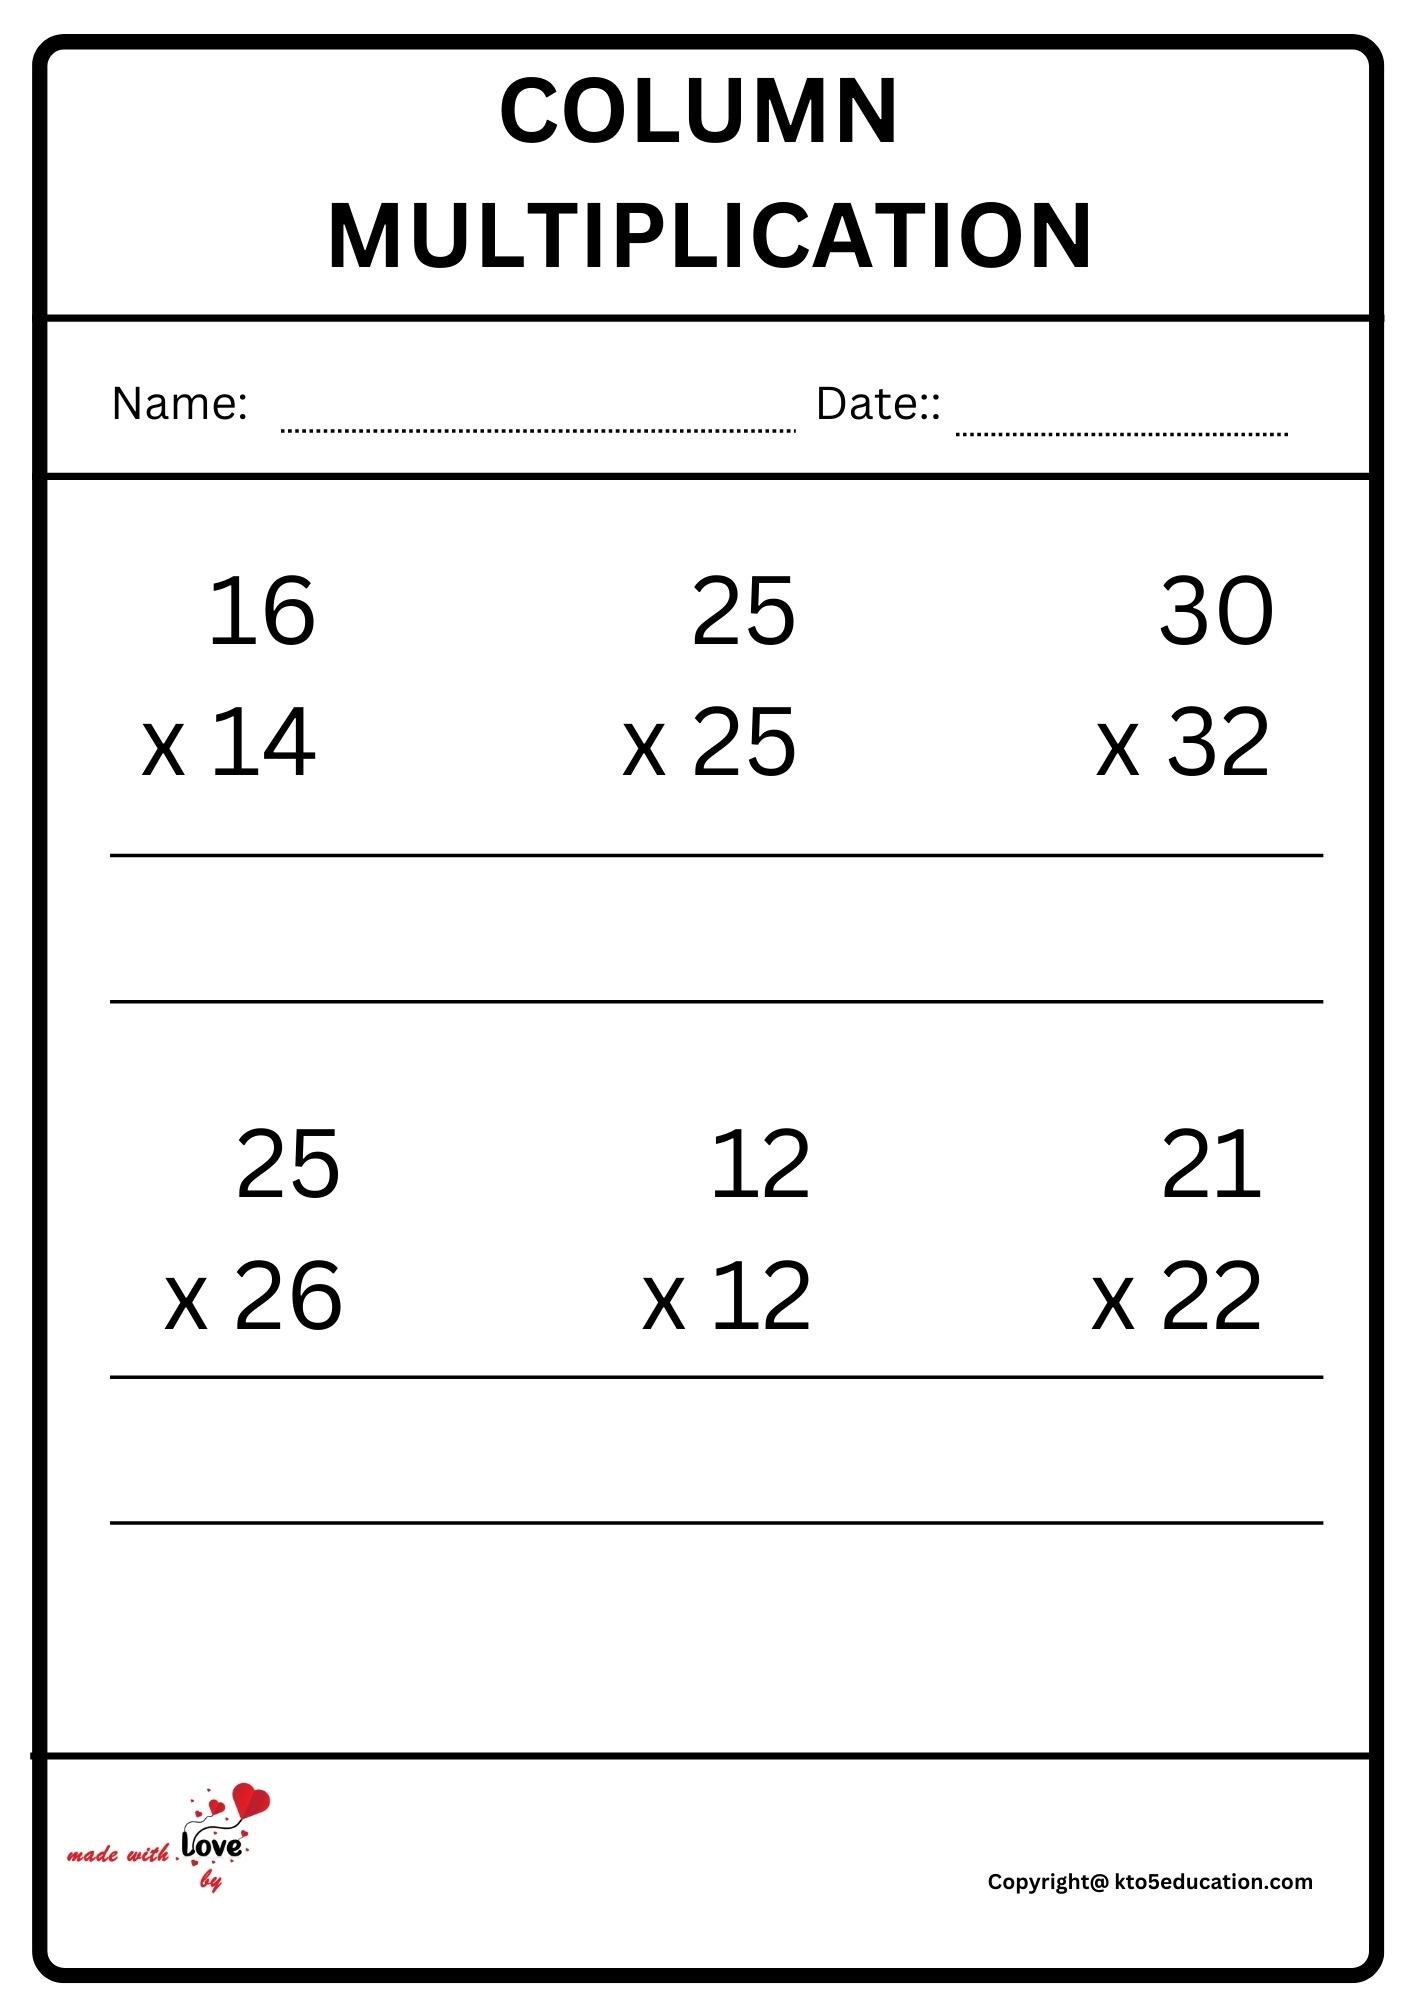 Column Multiplication Worksheet 2